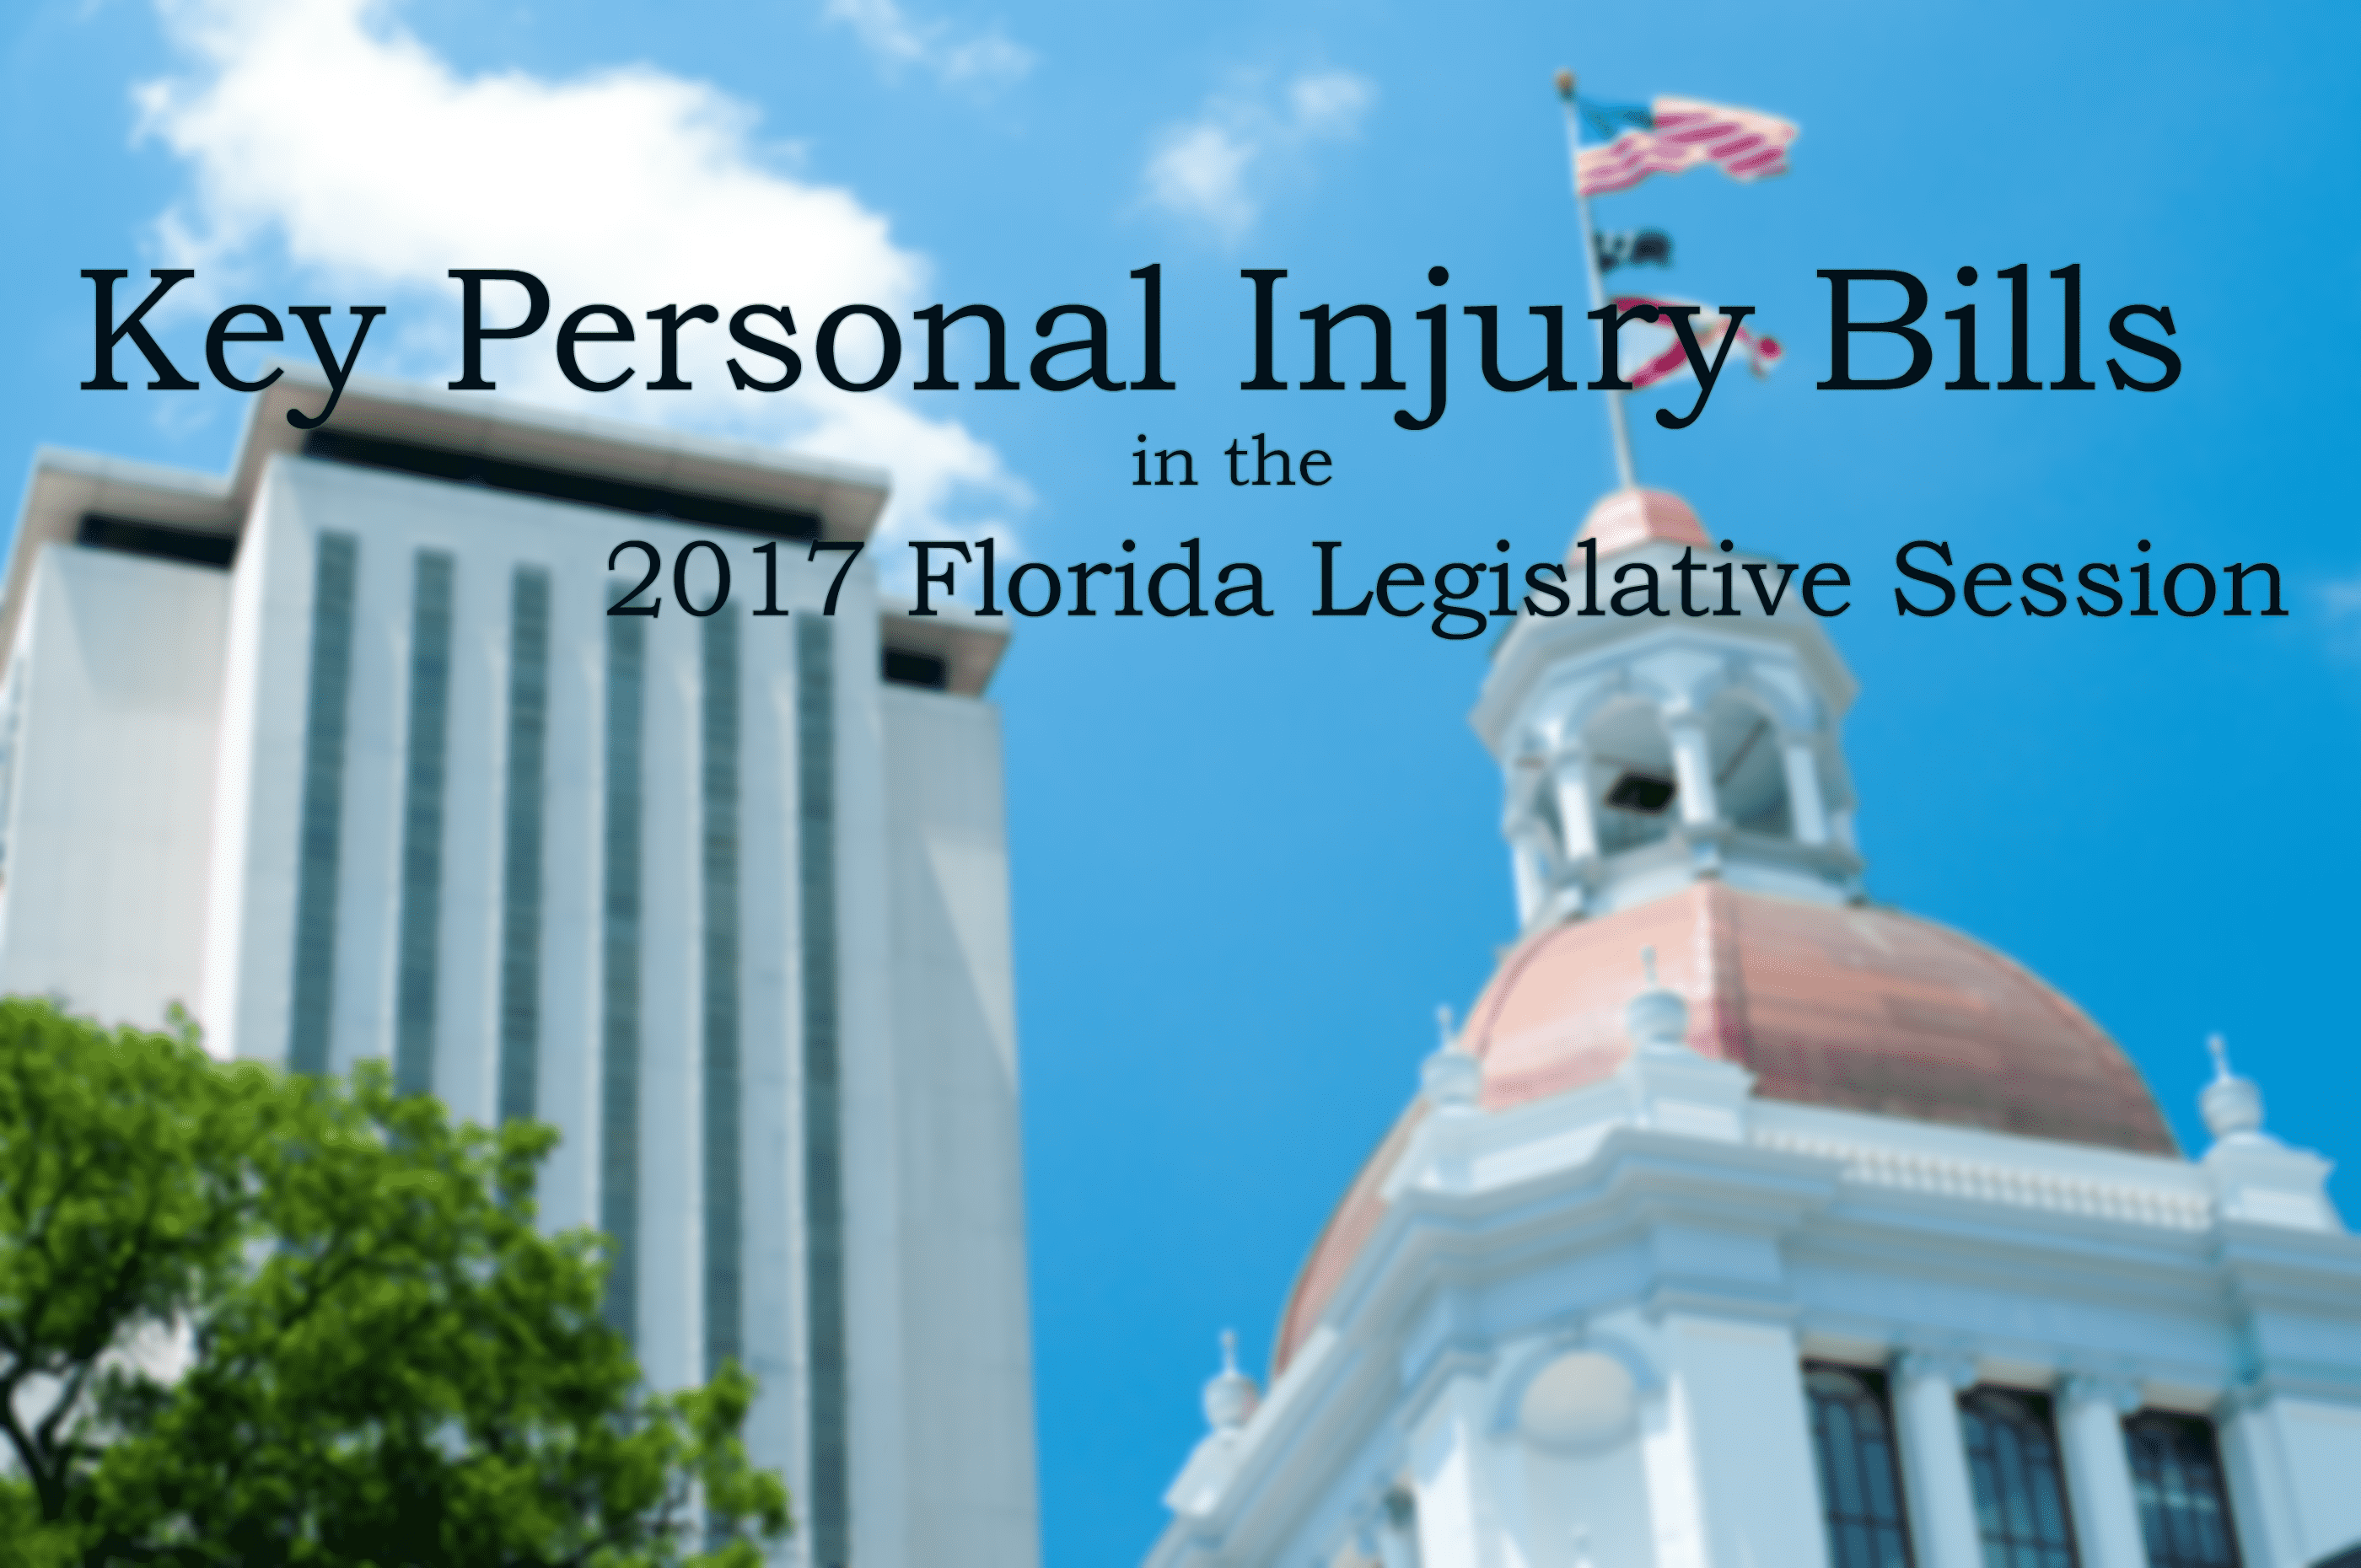 Key Legislative Bills relating to Personal Injury in the 2017 Florida Legislative Session